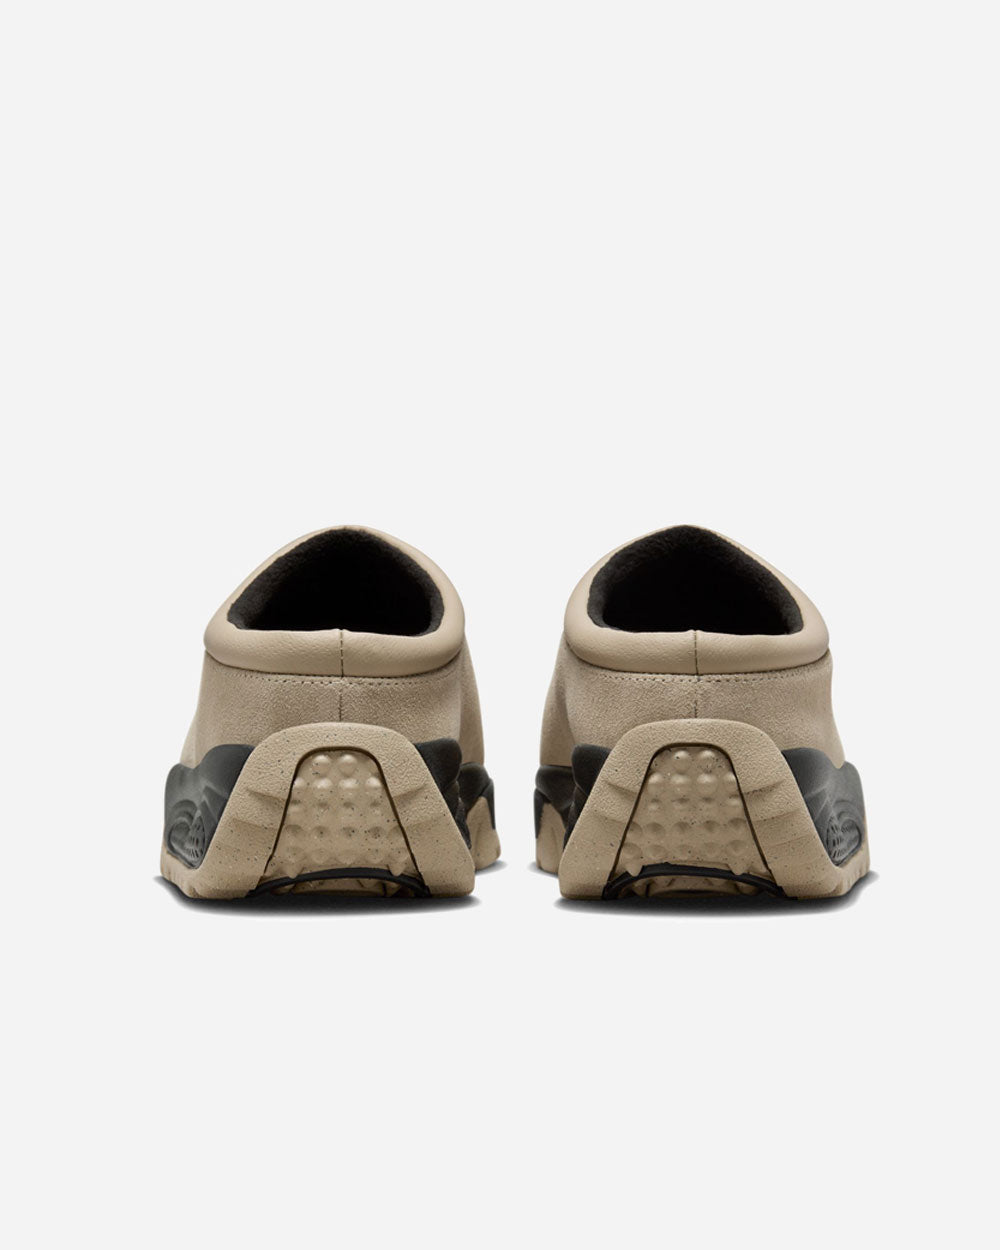 Nike Acg Rufus Limestone/Black FV2923-200